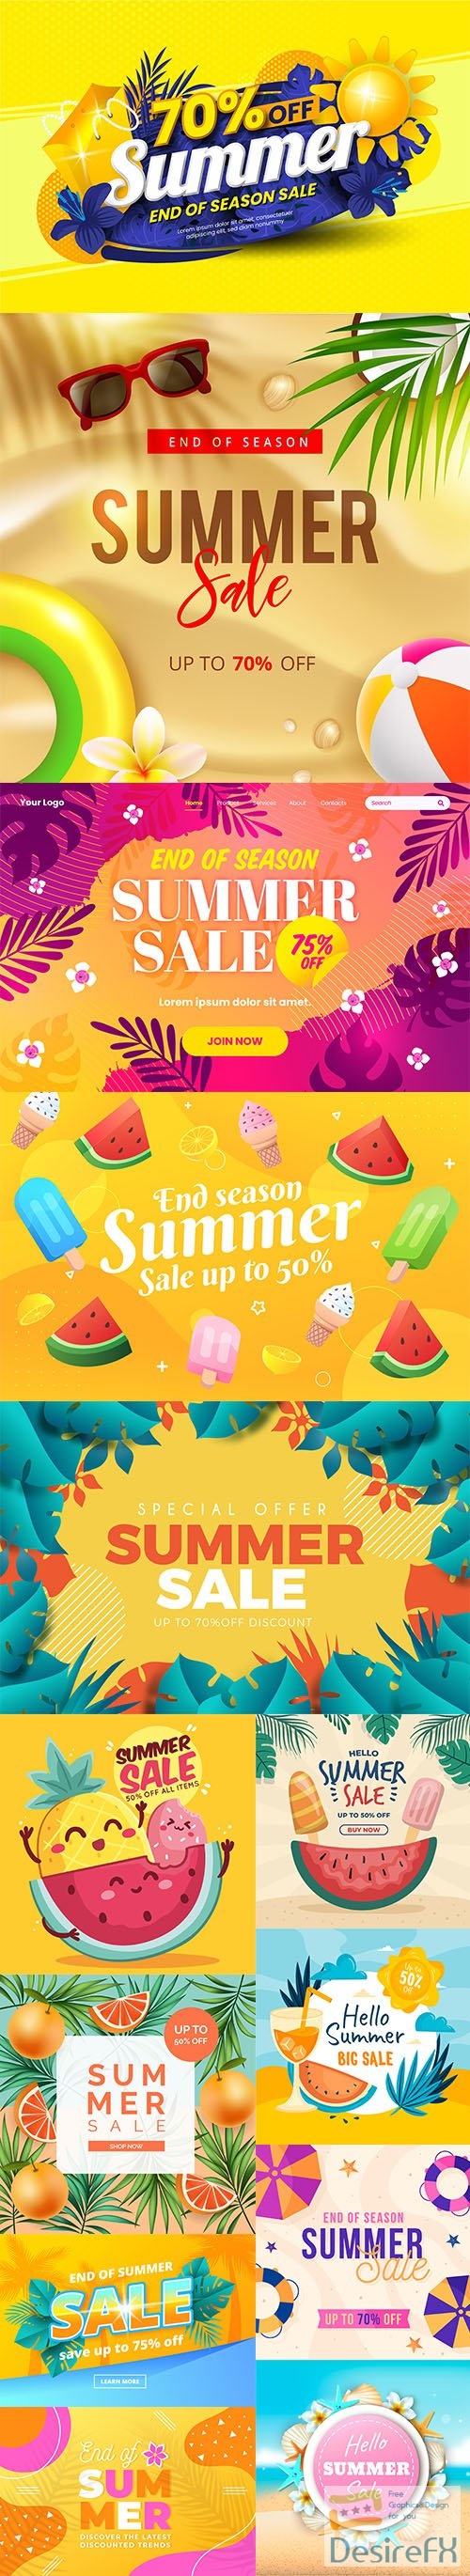 Colorful summer sale backgrounds set